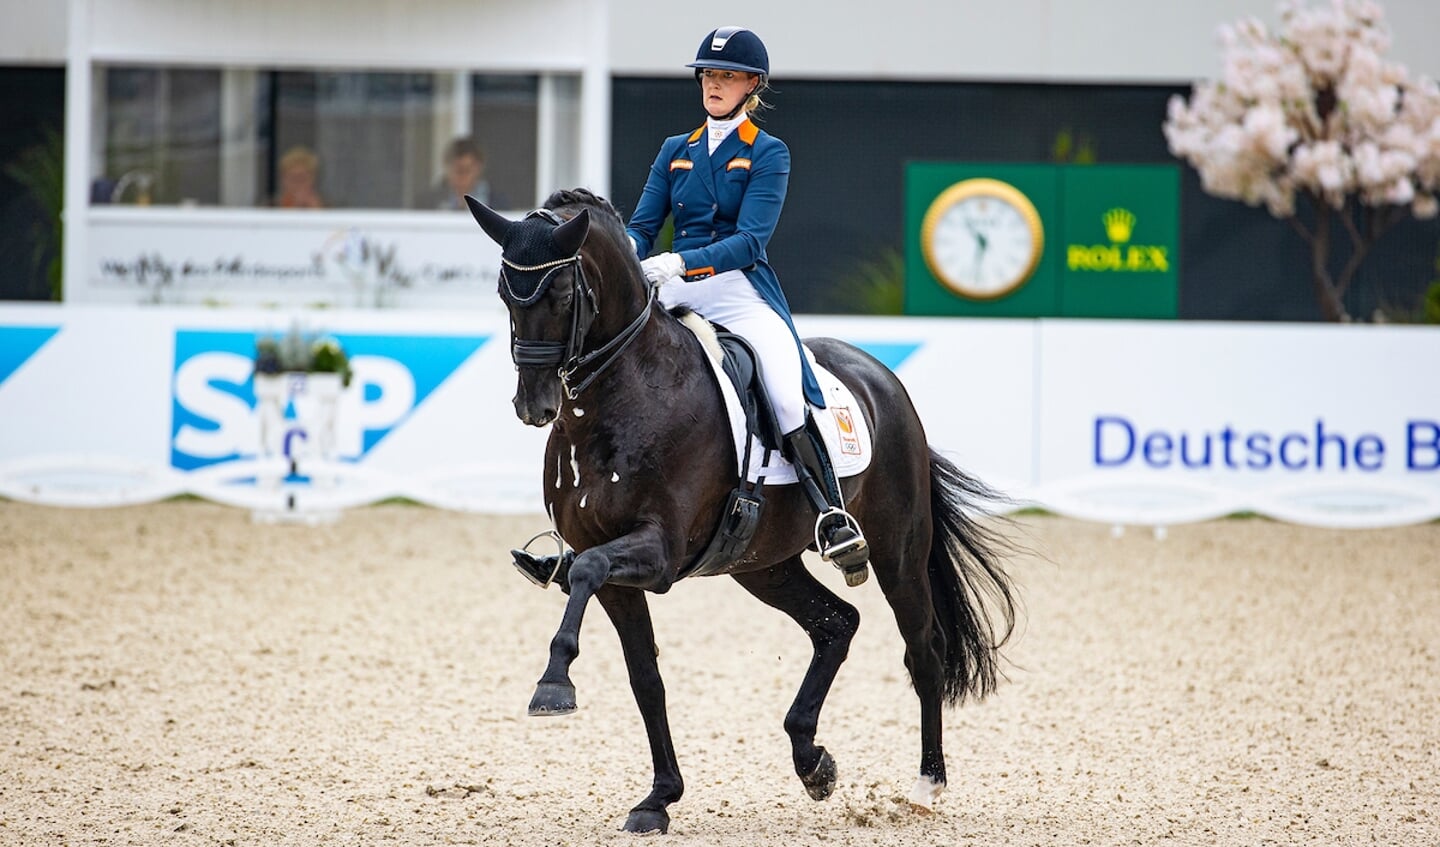 Denise Nekeman - Boston STH
World Equestrian Festival CHIO Aachen 2021
© DigiShots